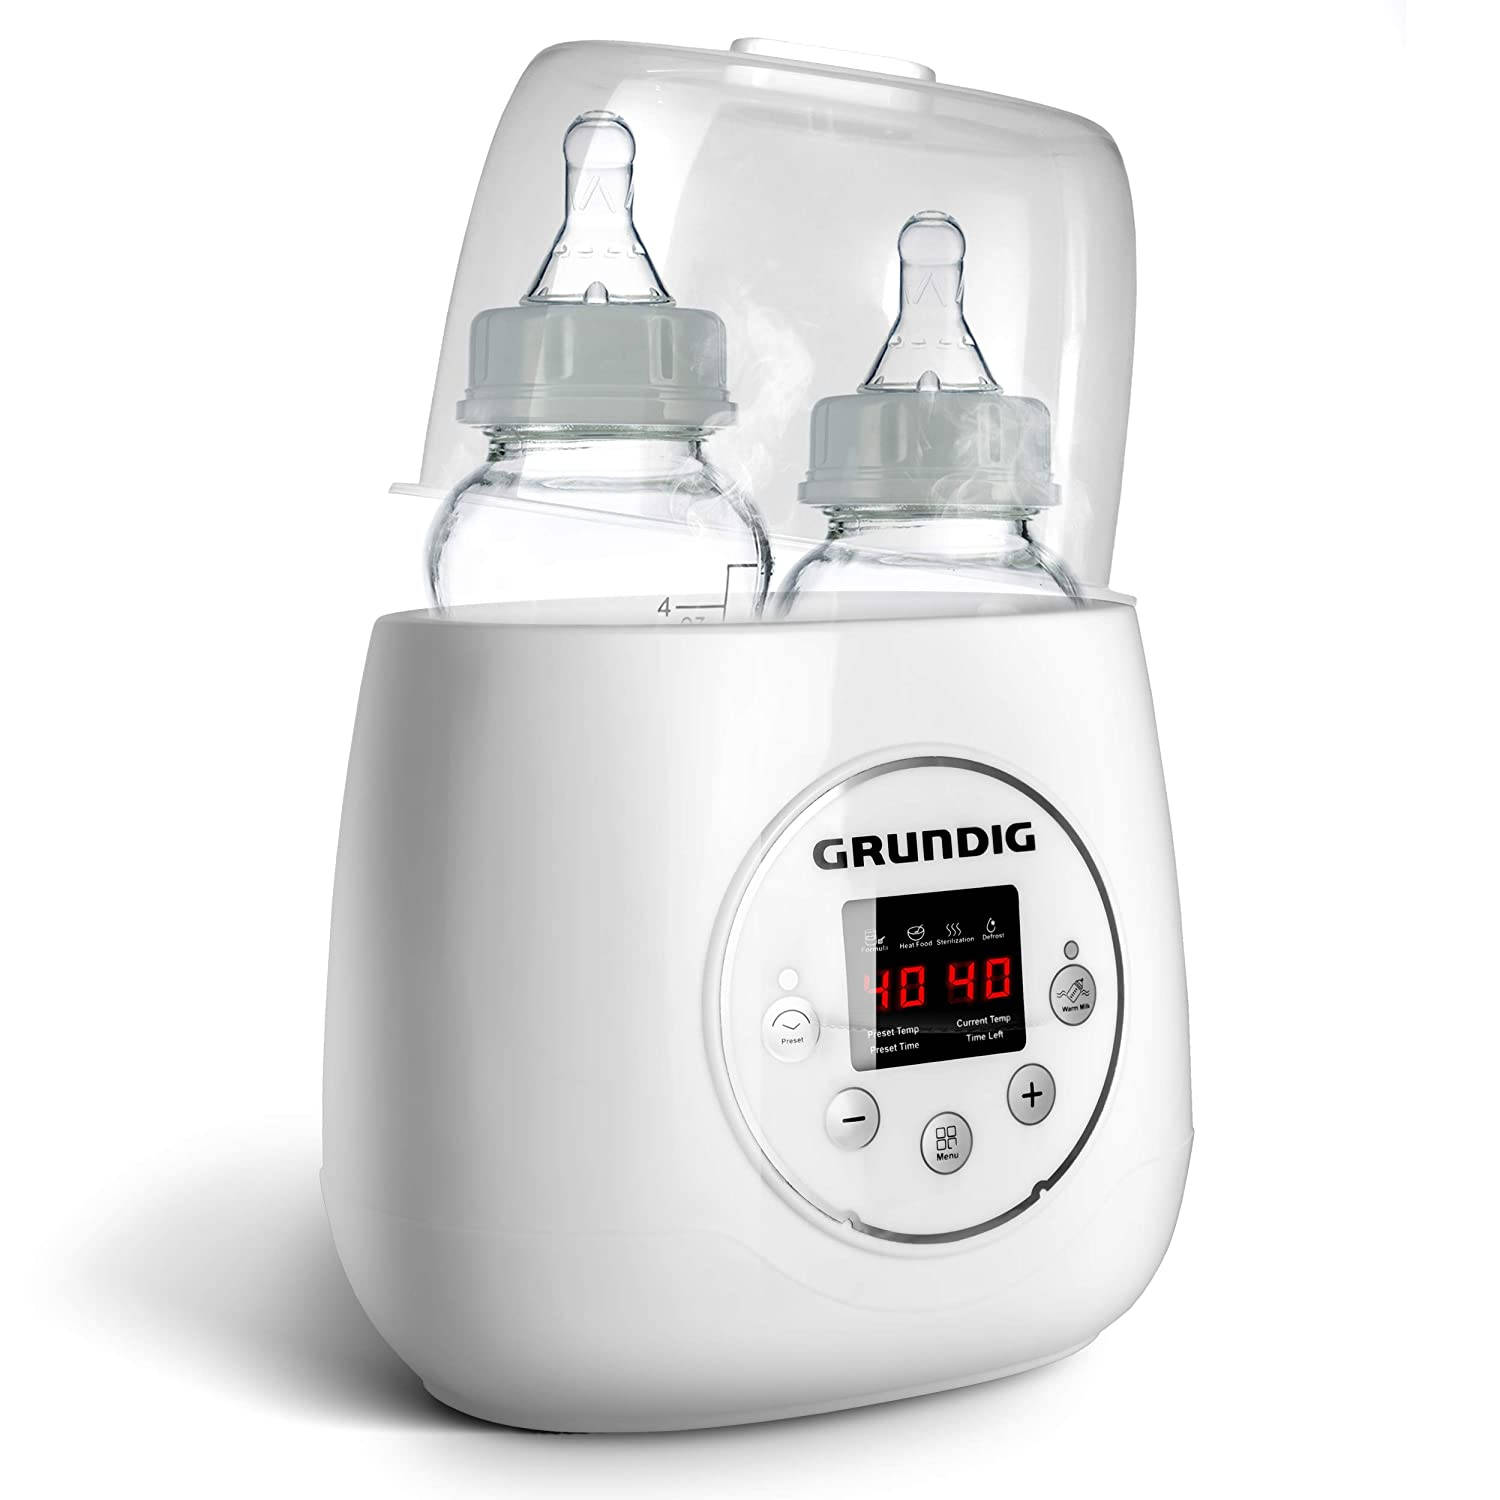 Grundig Flessenwarmer - Dubbele Flesverwarmer - 200W - Ruimte voor 2 Babyflessen - Verwarmen, Ontdooien en Steriliseren - Incl. Stoomkap - Wit